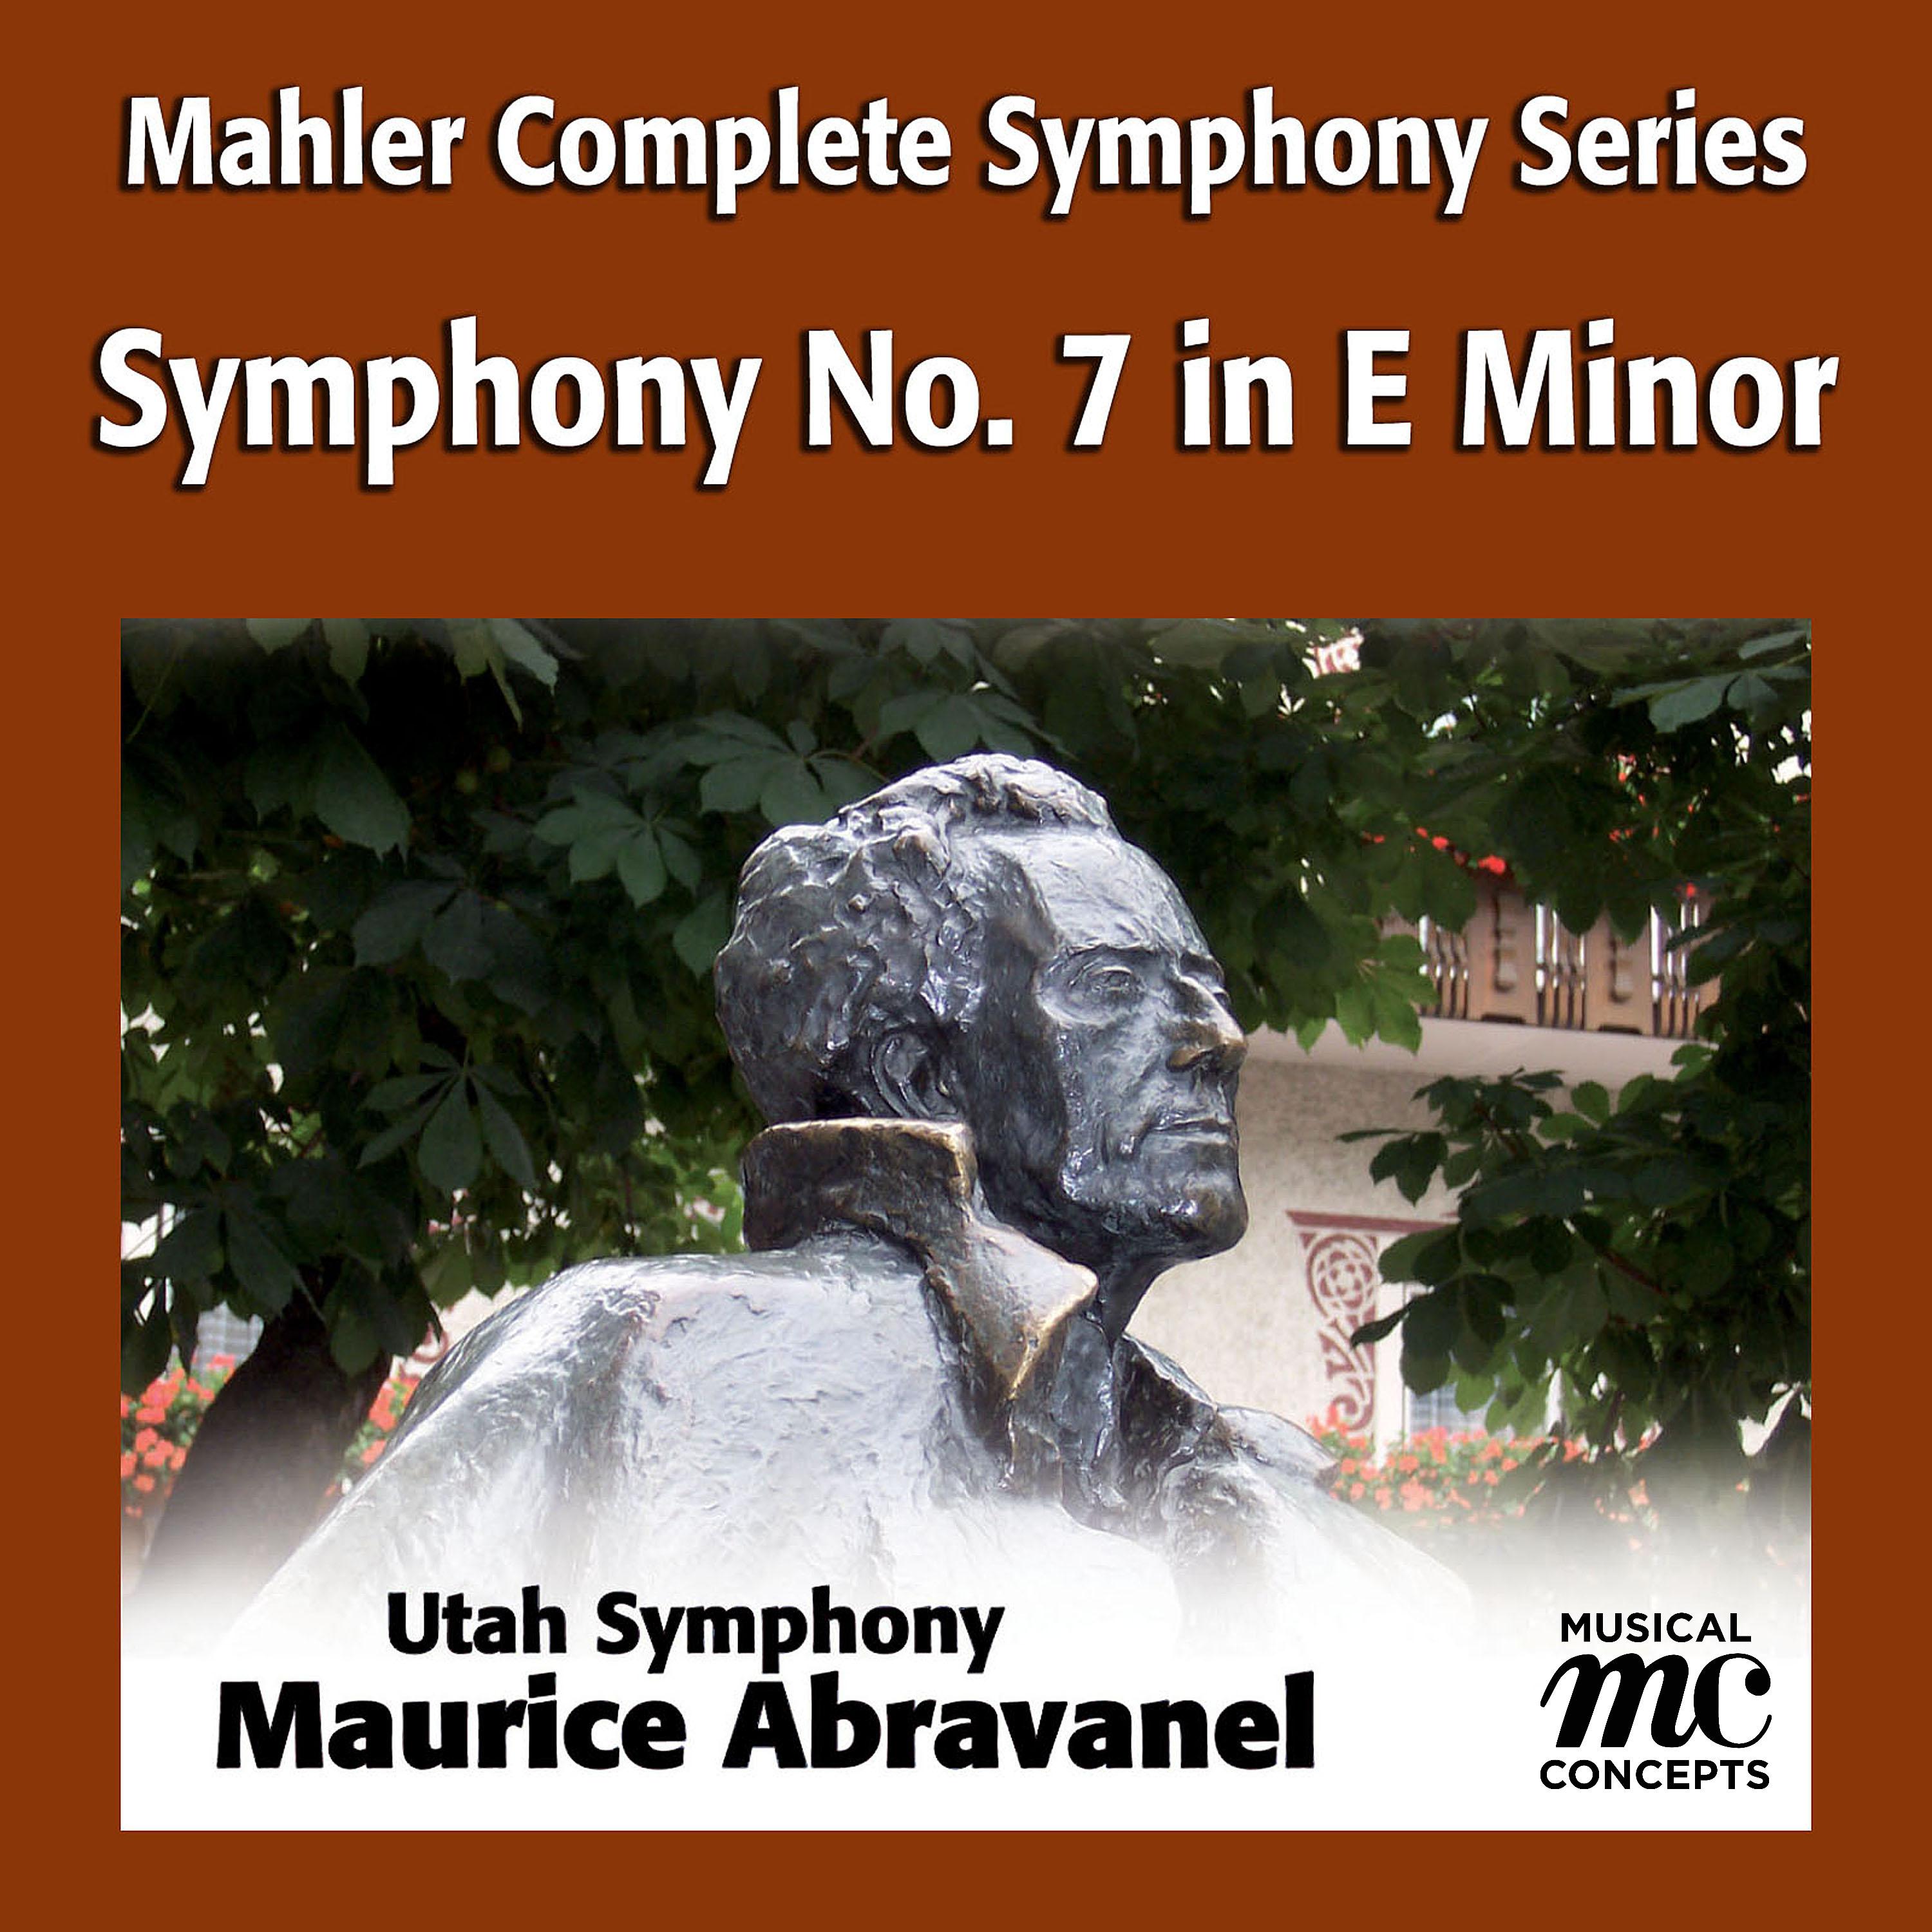 Mahler Complete Symphony Series: Symphony No. 7 in E Minor